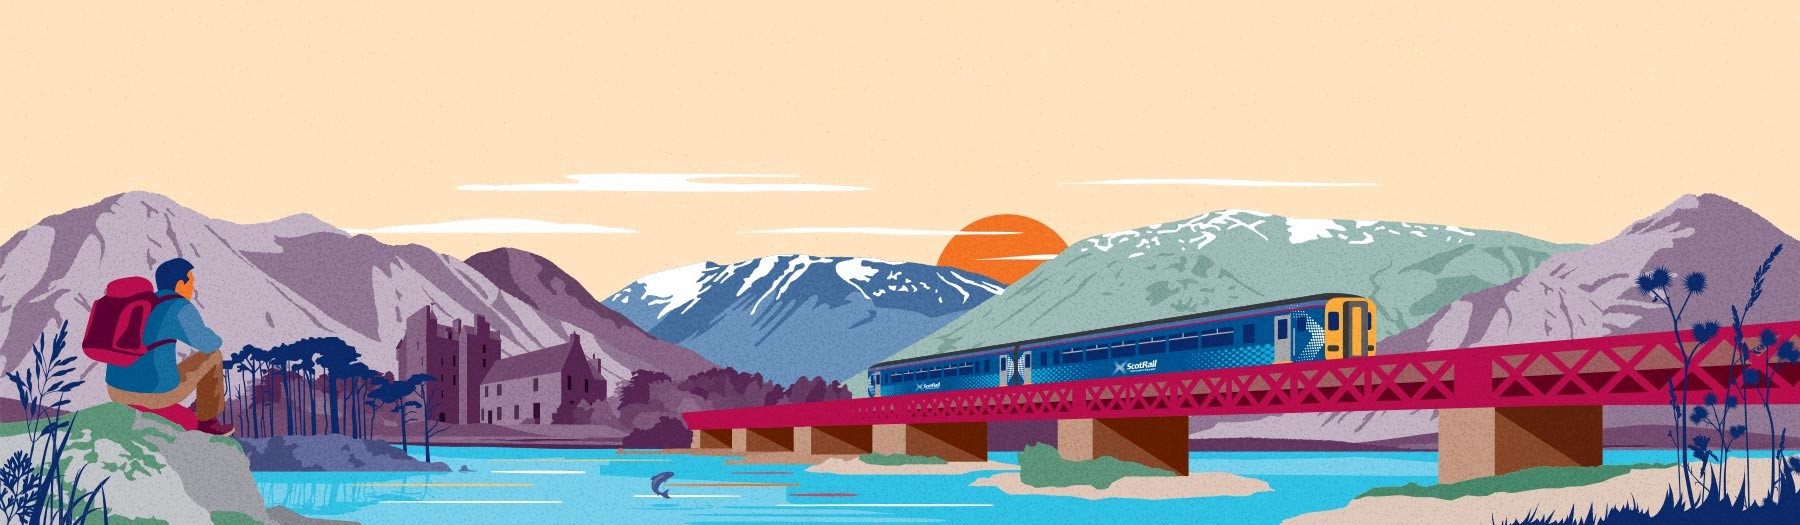 Great Scenic Railway Journeys illustration